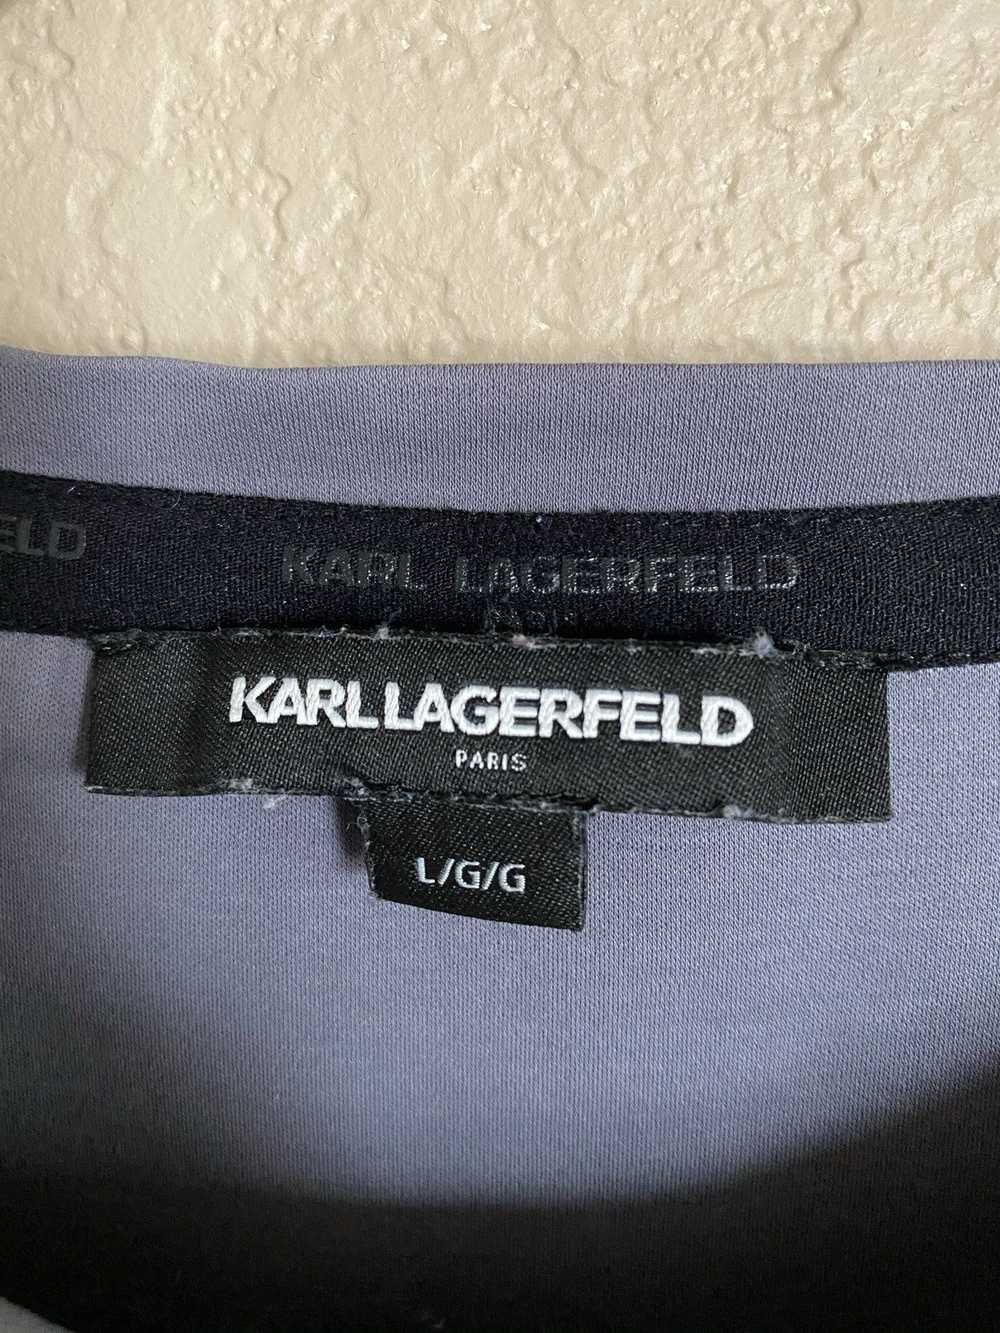 Karl Lagerfeld Cursive Logo Tee Shirt - image 4